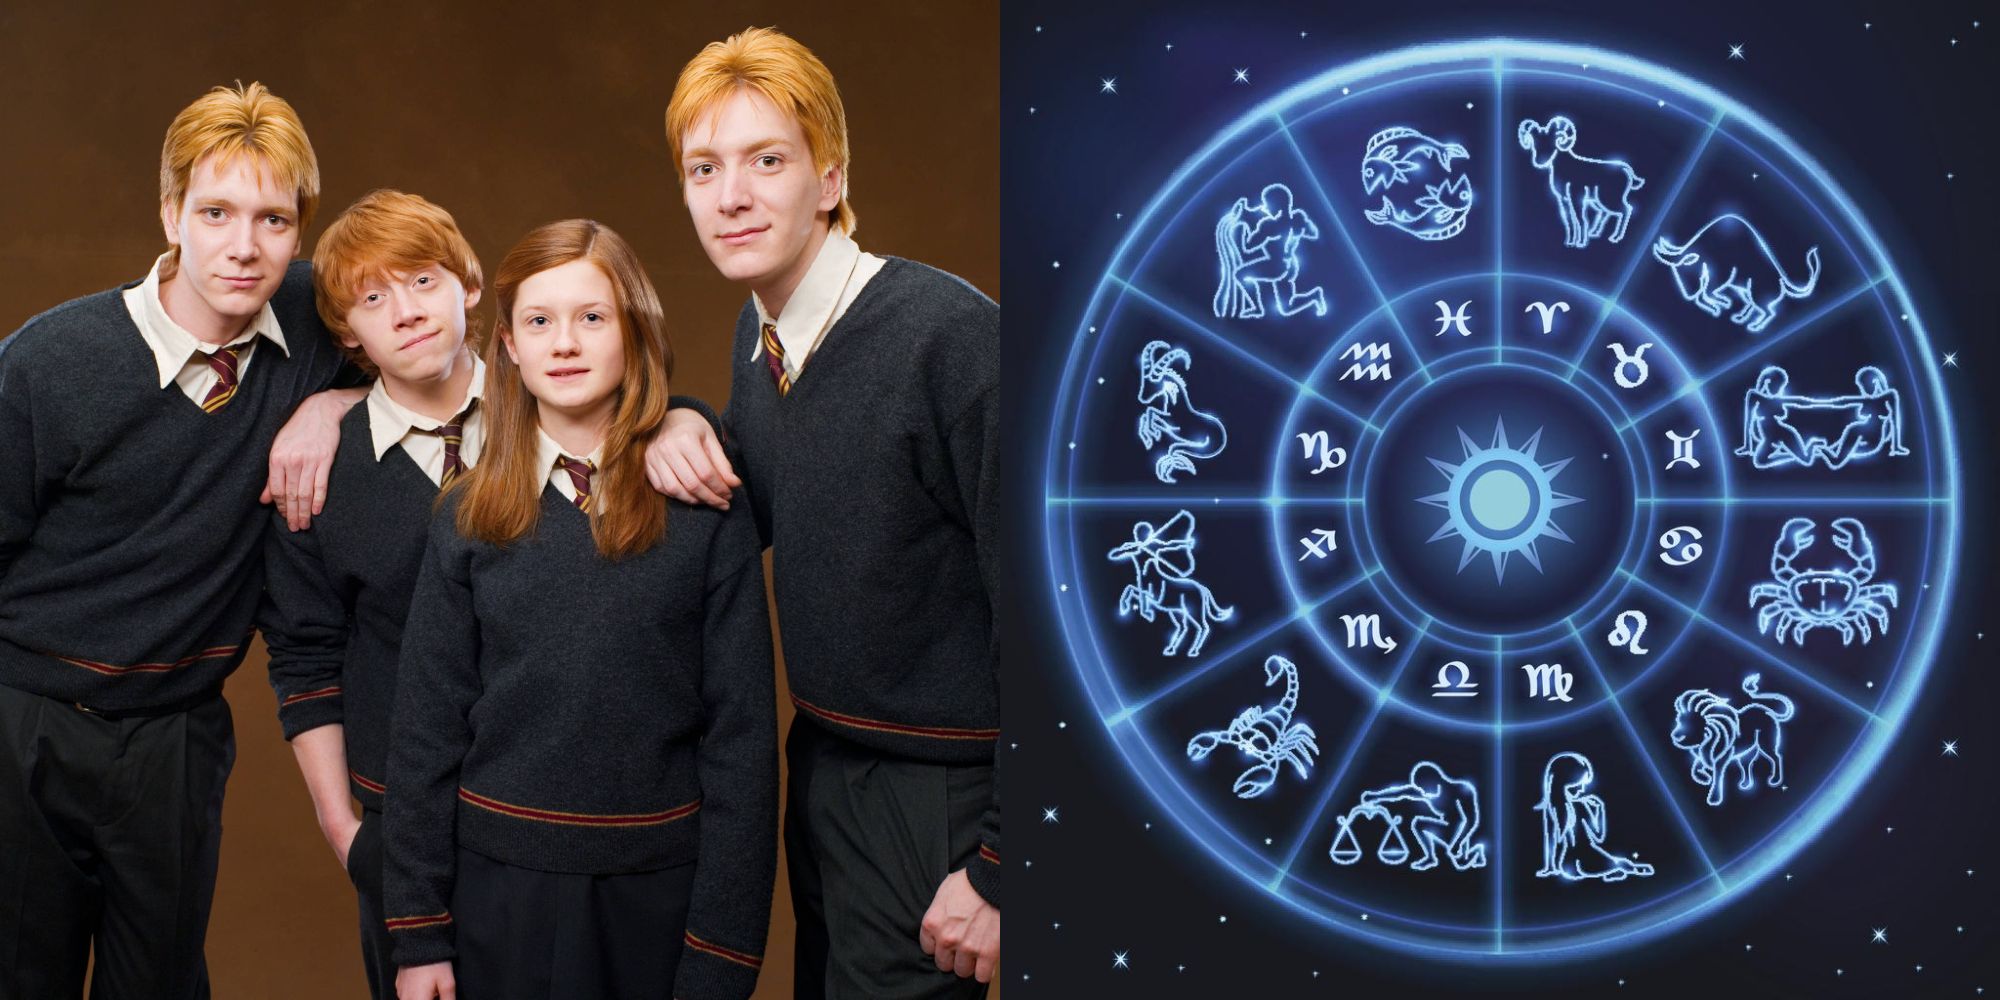 Split image showing The Weasley siblings and a zodiac wheel.